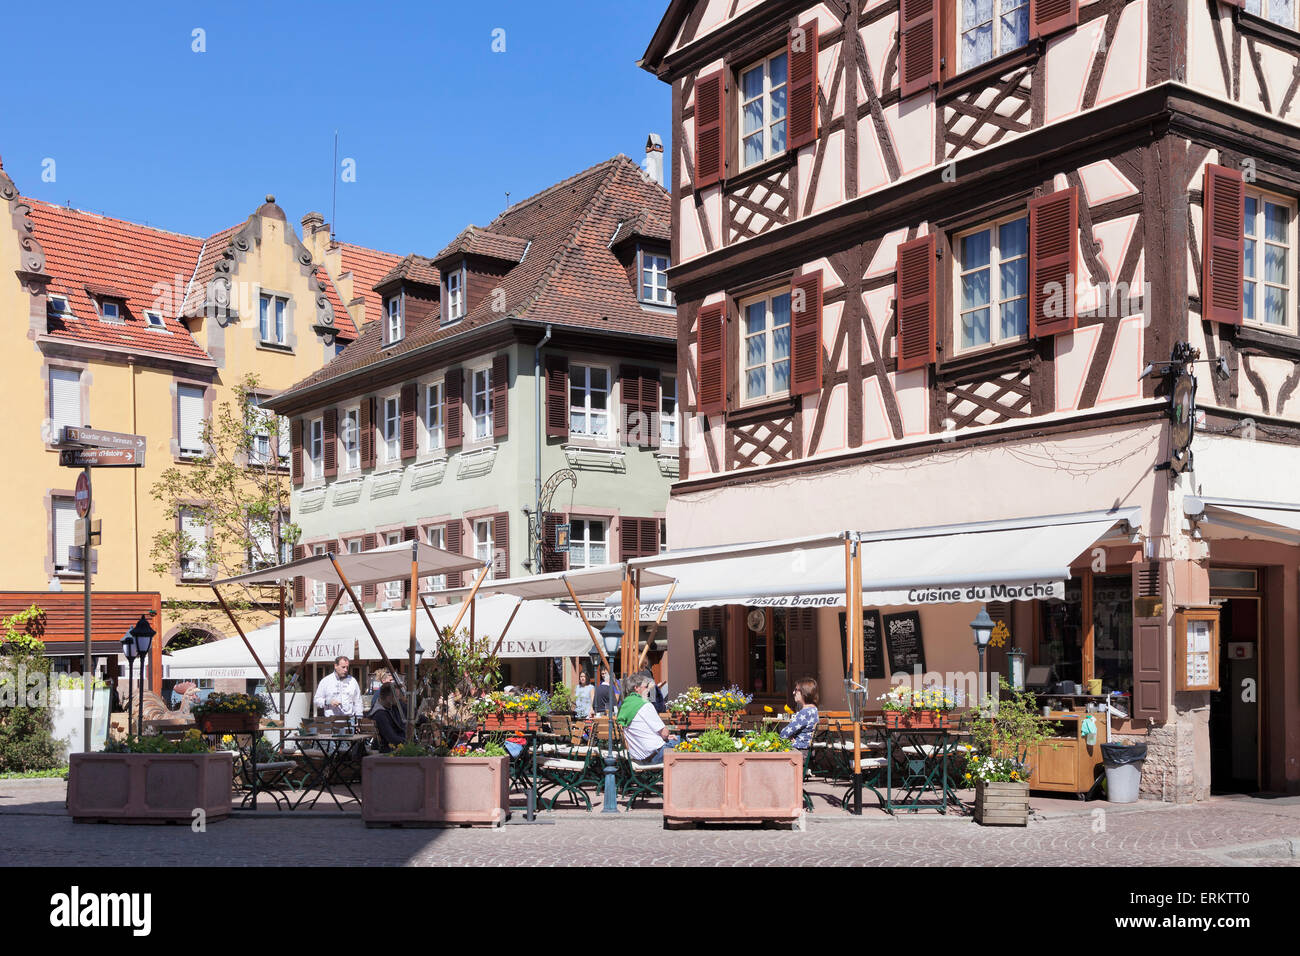 Restaurant Wistub Brenner, Colmar, Alsace, France, Europe Stock Photo